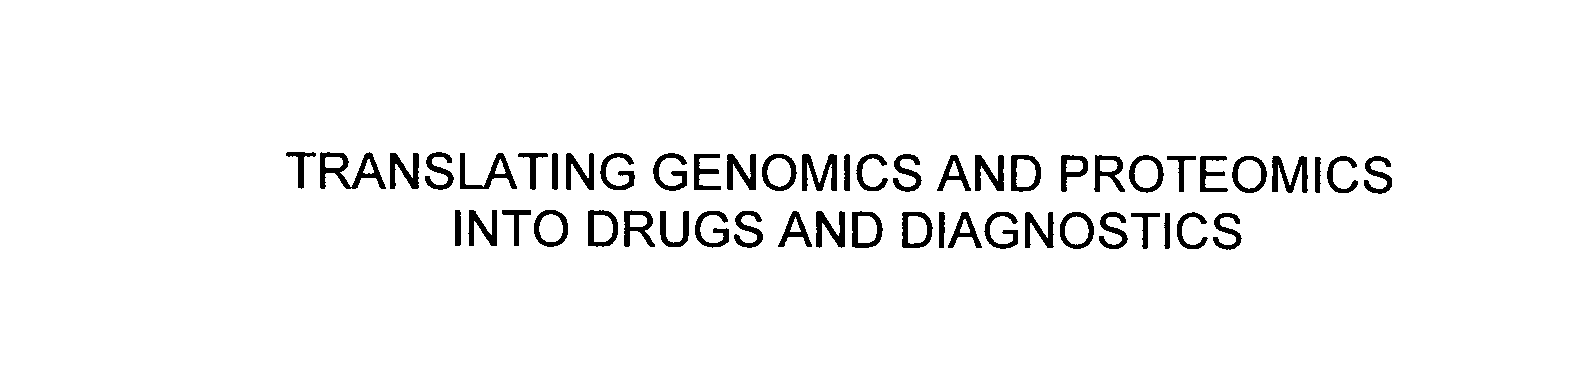  TRANSLATING GENOMICS AND PROTEOMICS INTO DRUGS AND DIAGNOSTICS